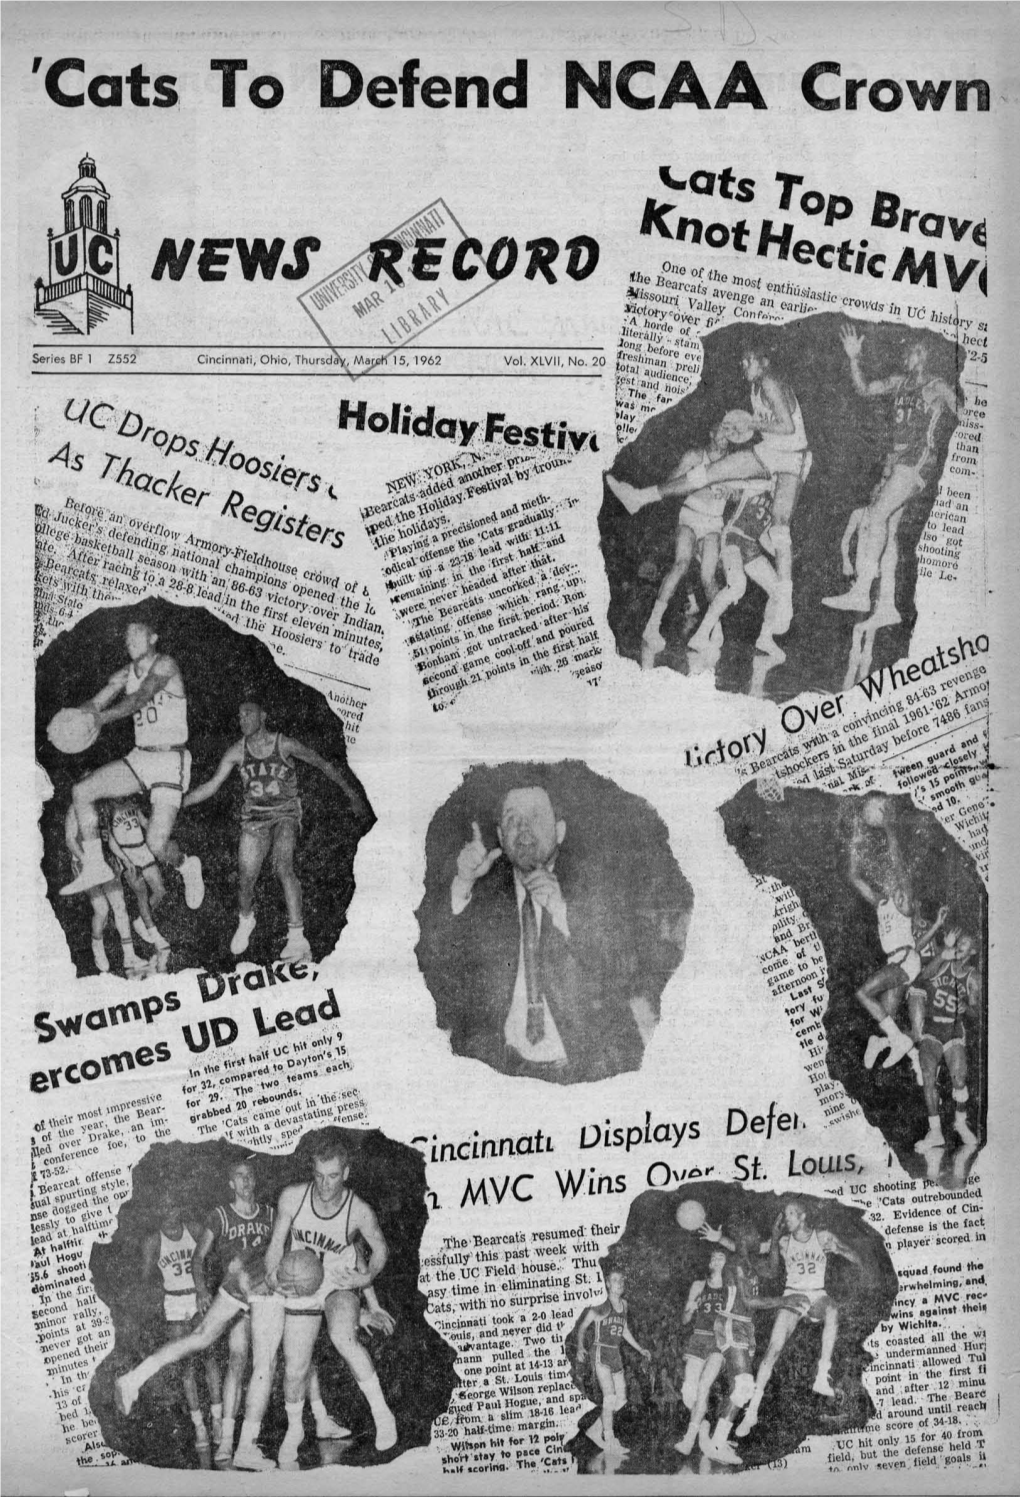 University of Cincinnati News Record. Thursday, March 15, 1962. Vol. XLVII, No